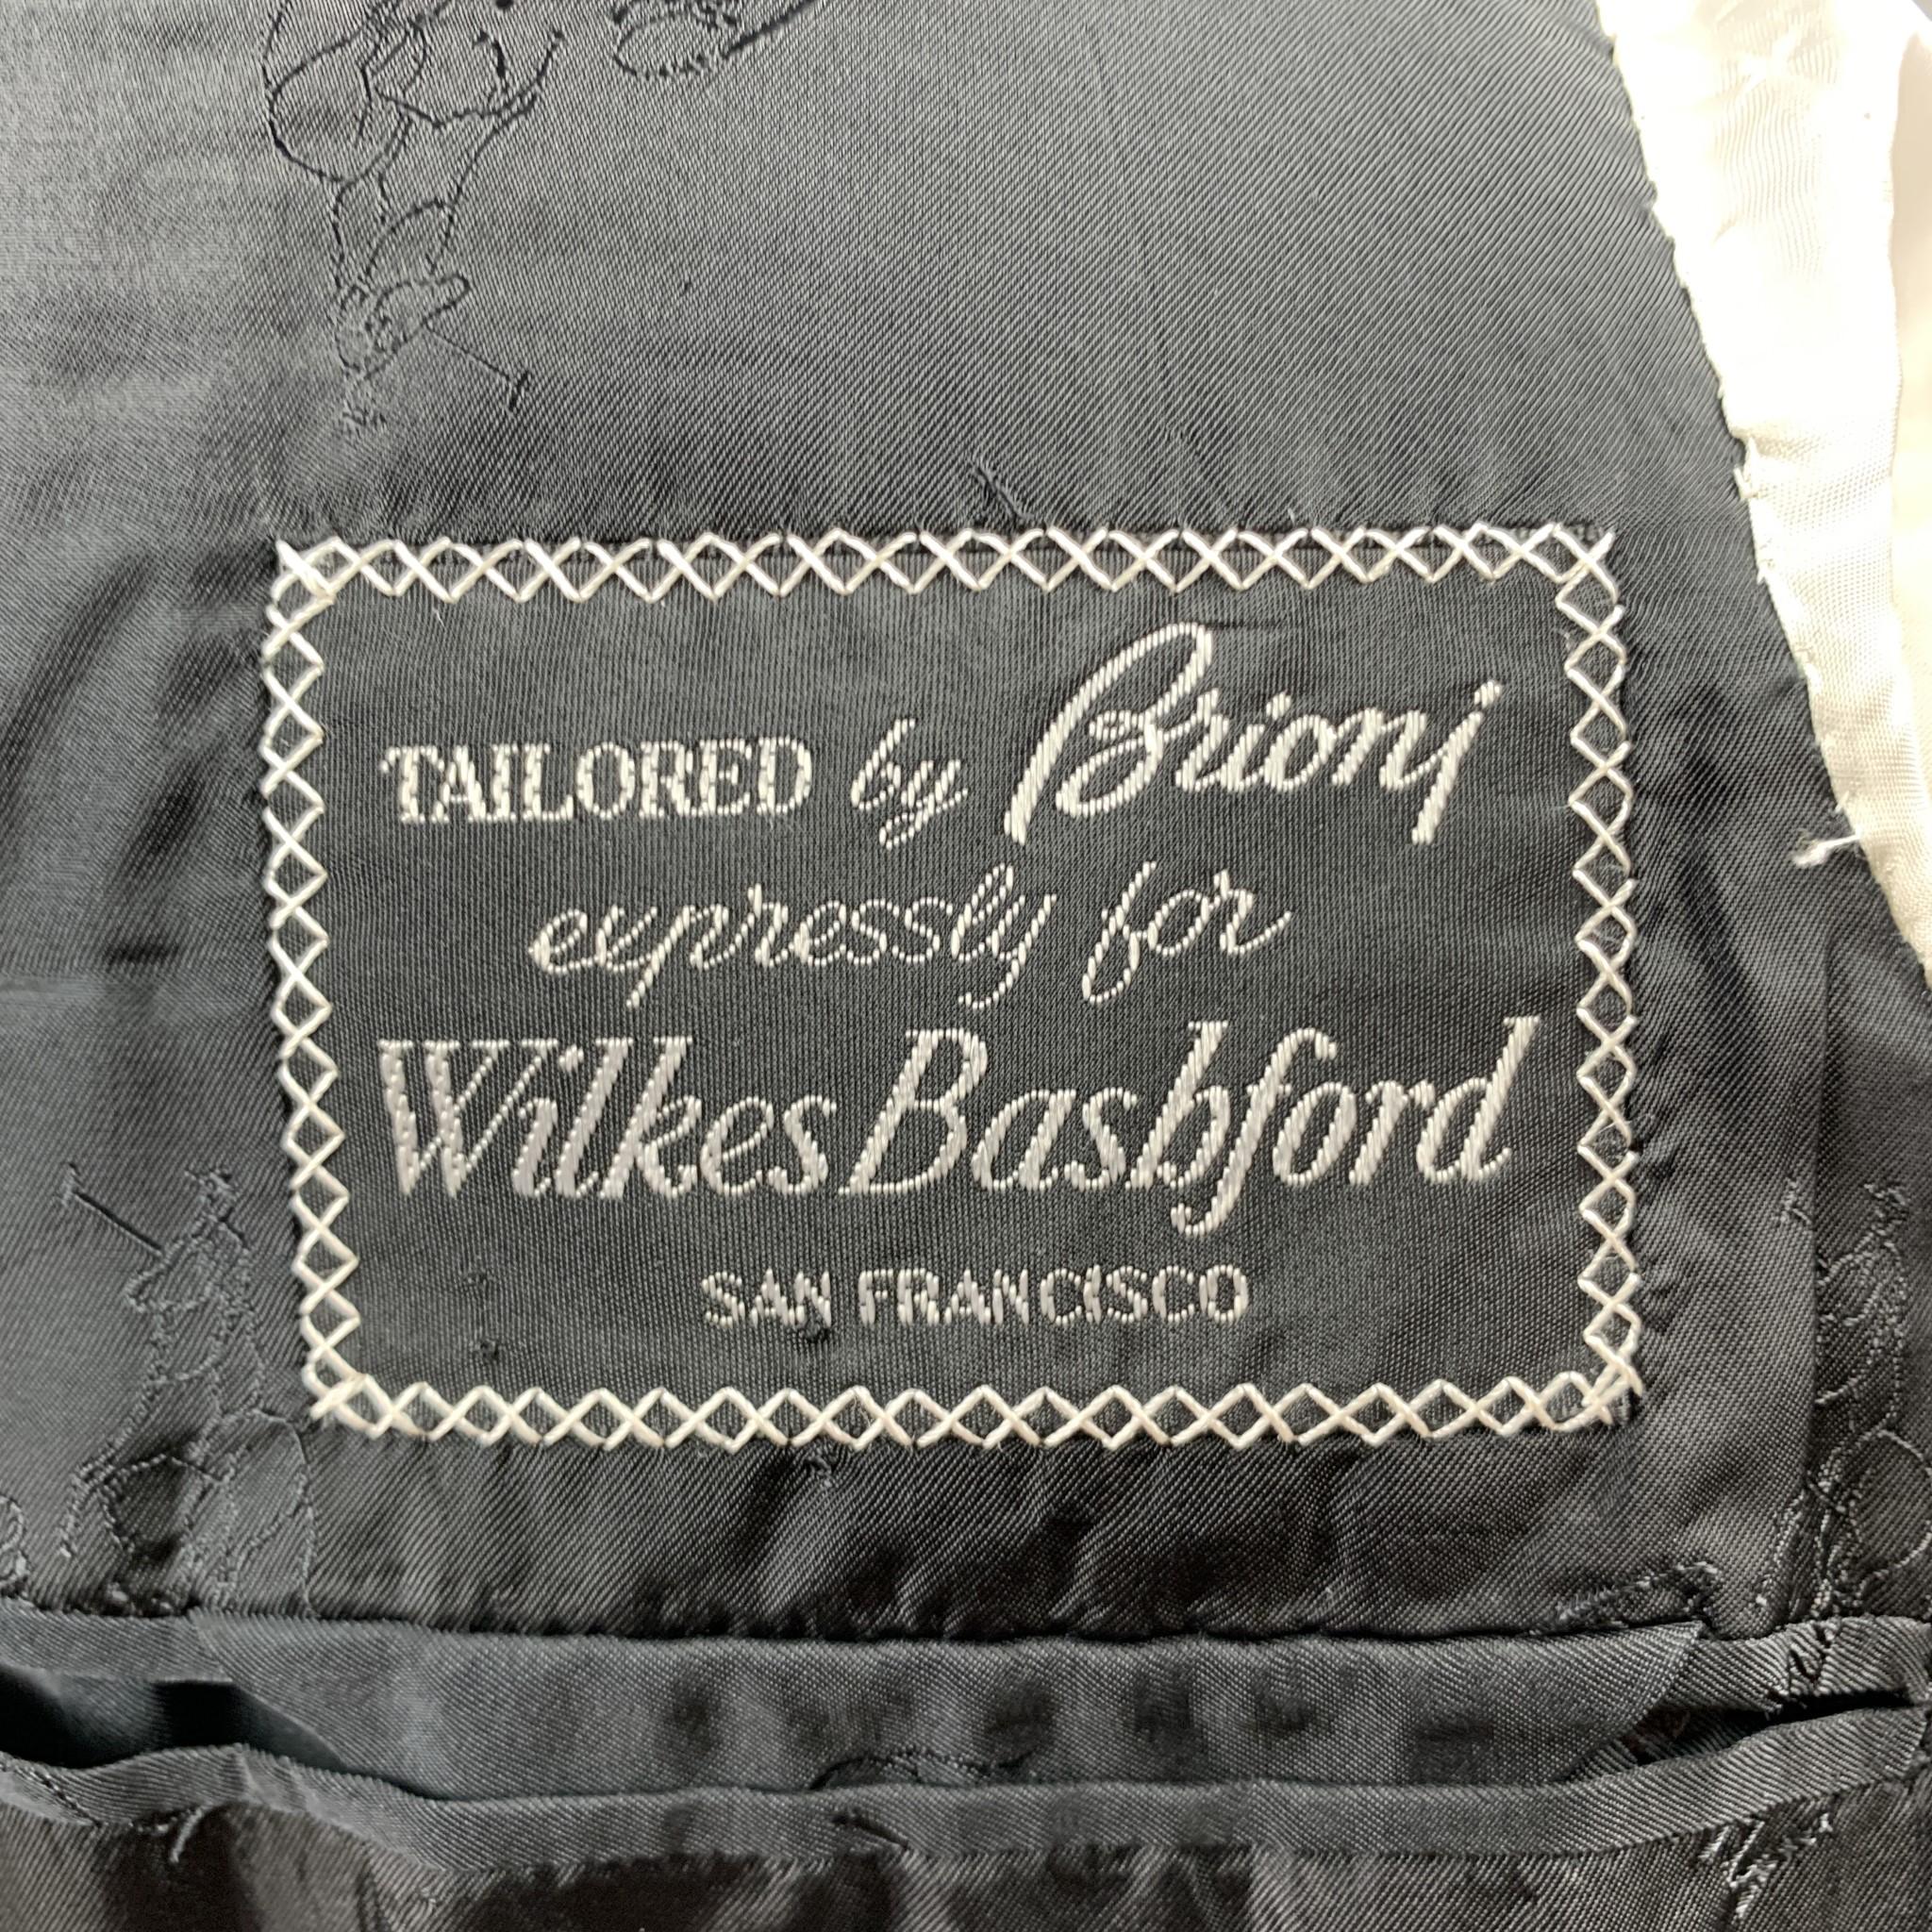 BRIONI for WILKES BASHFORD Size 40 Long Black Wool Peak Lapel Tuxedo 1